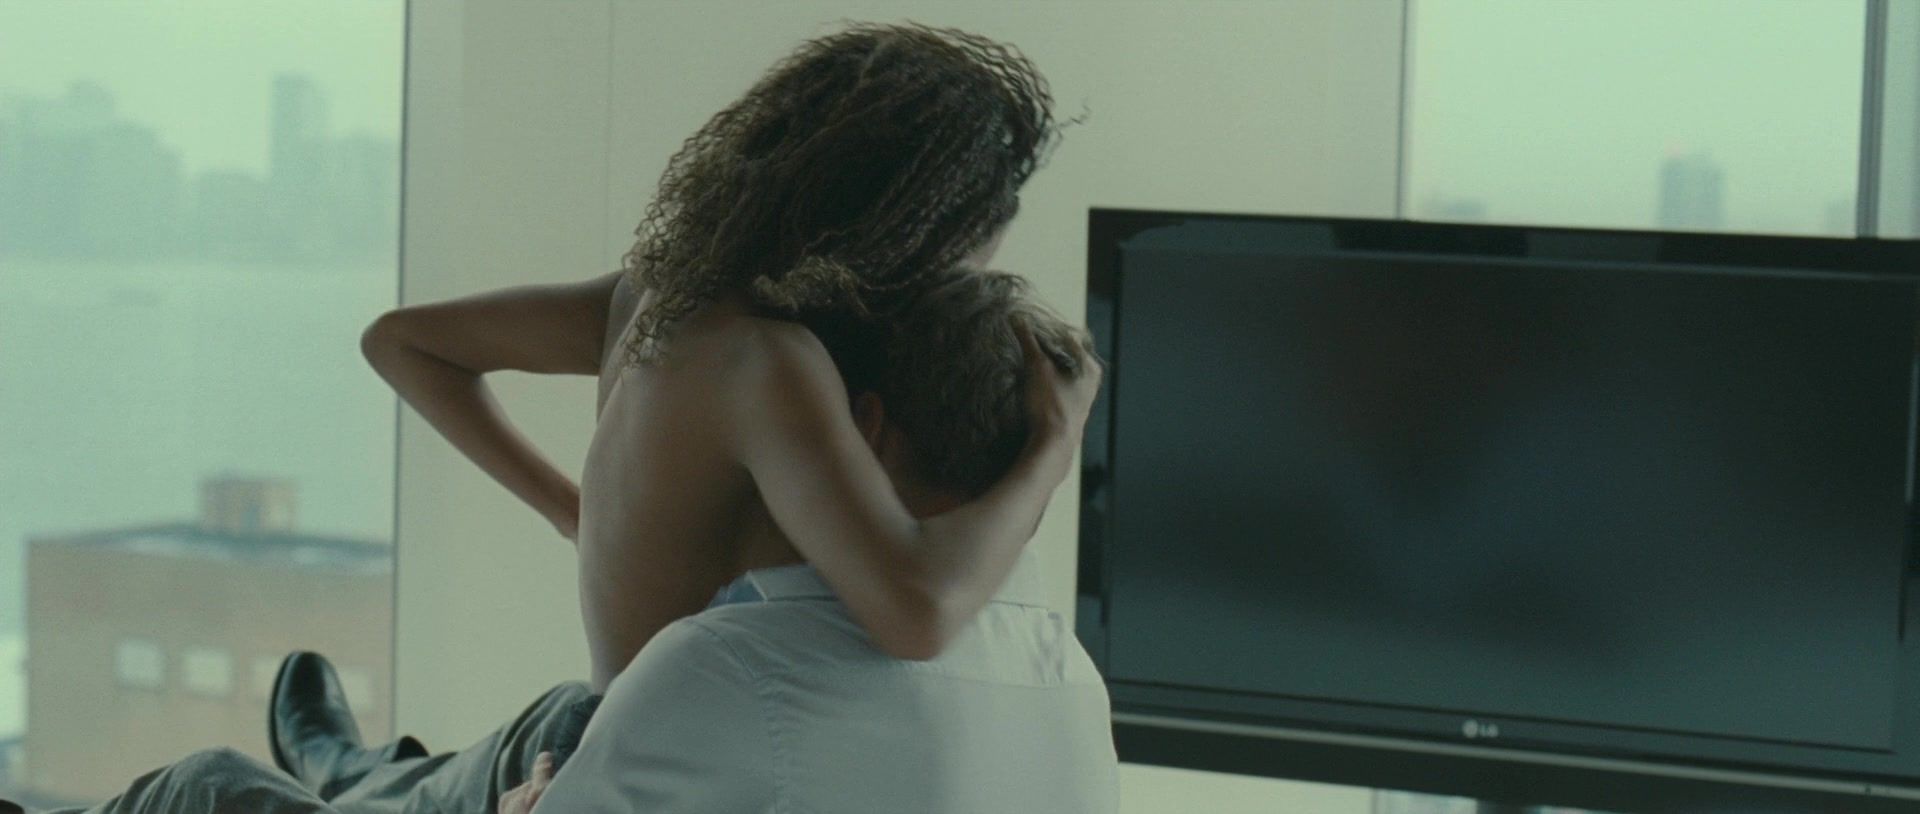 Horny Interracial toples sex scene | Celebrity: Nicole Beharie | The Adult Movie "Shame" | Released in 2011 Stranger